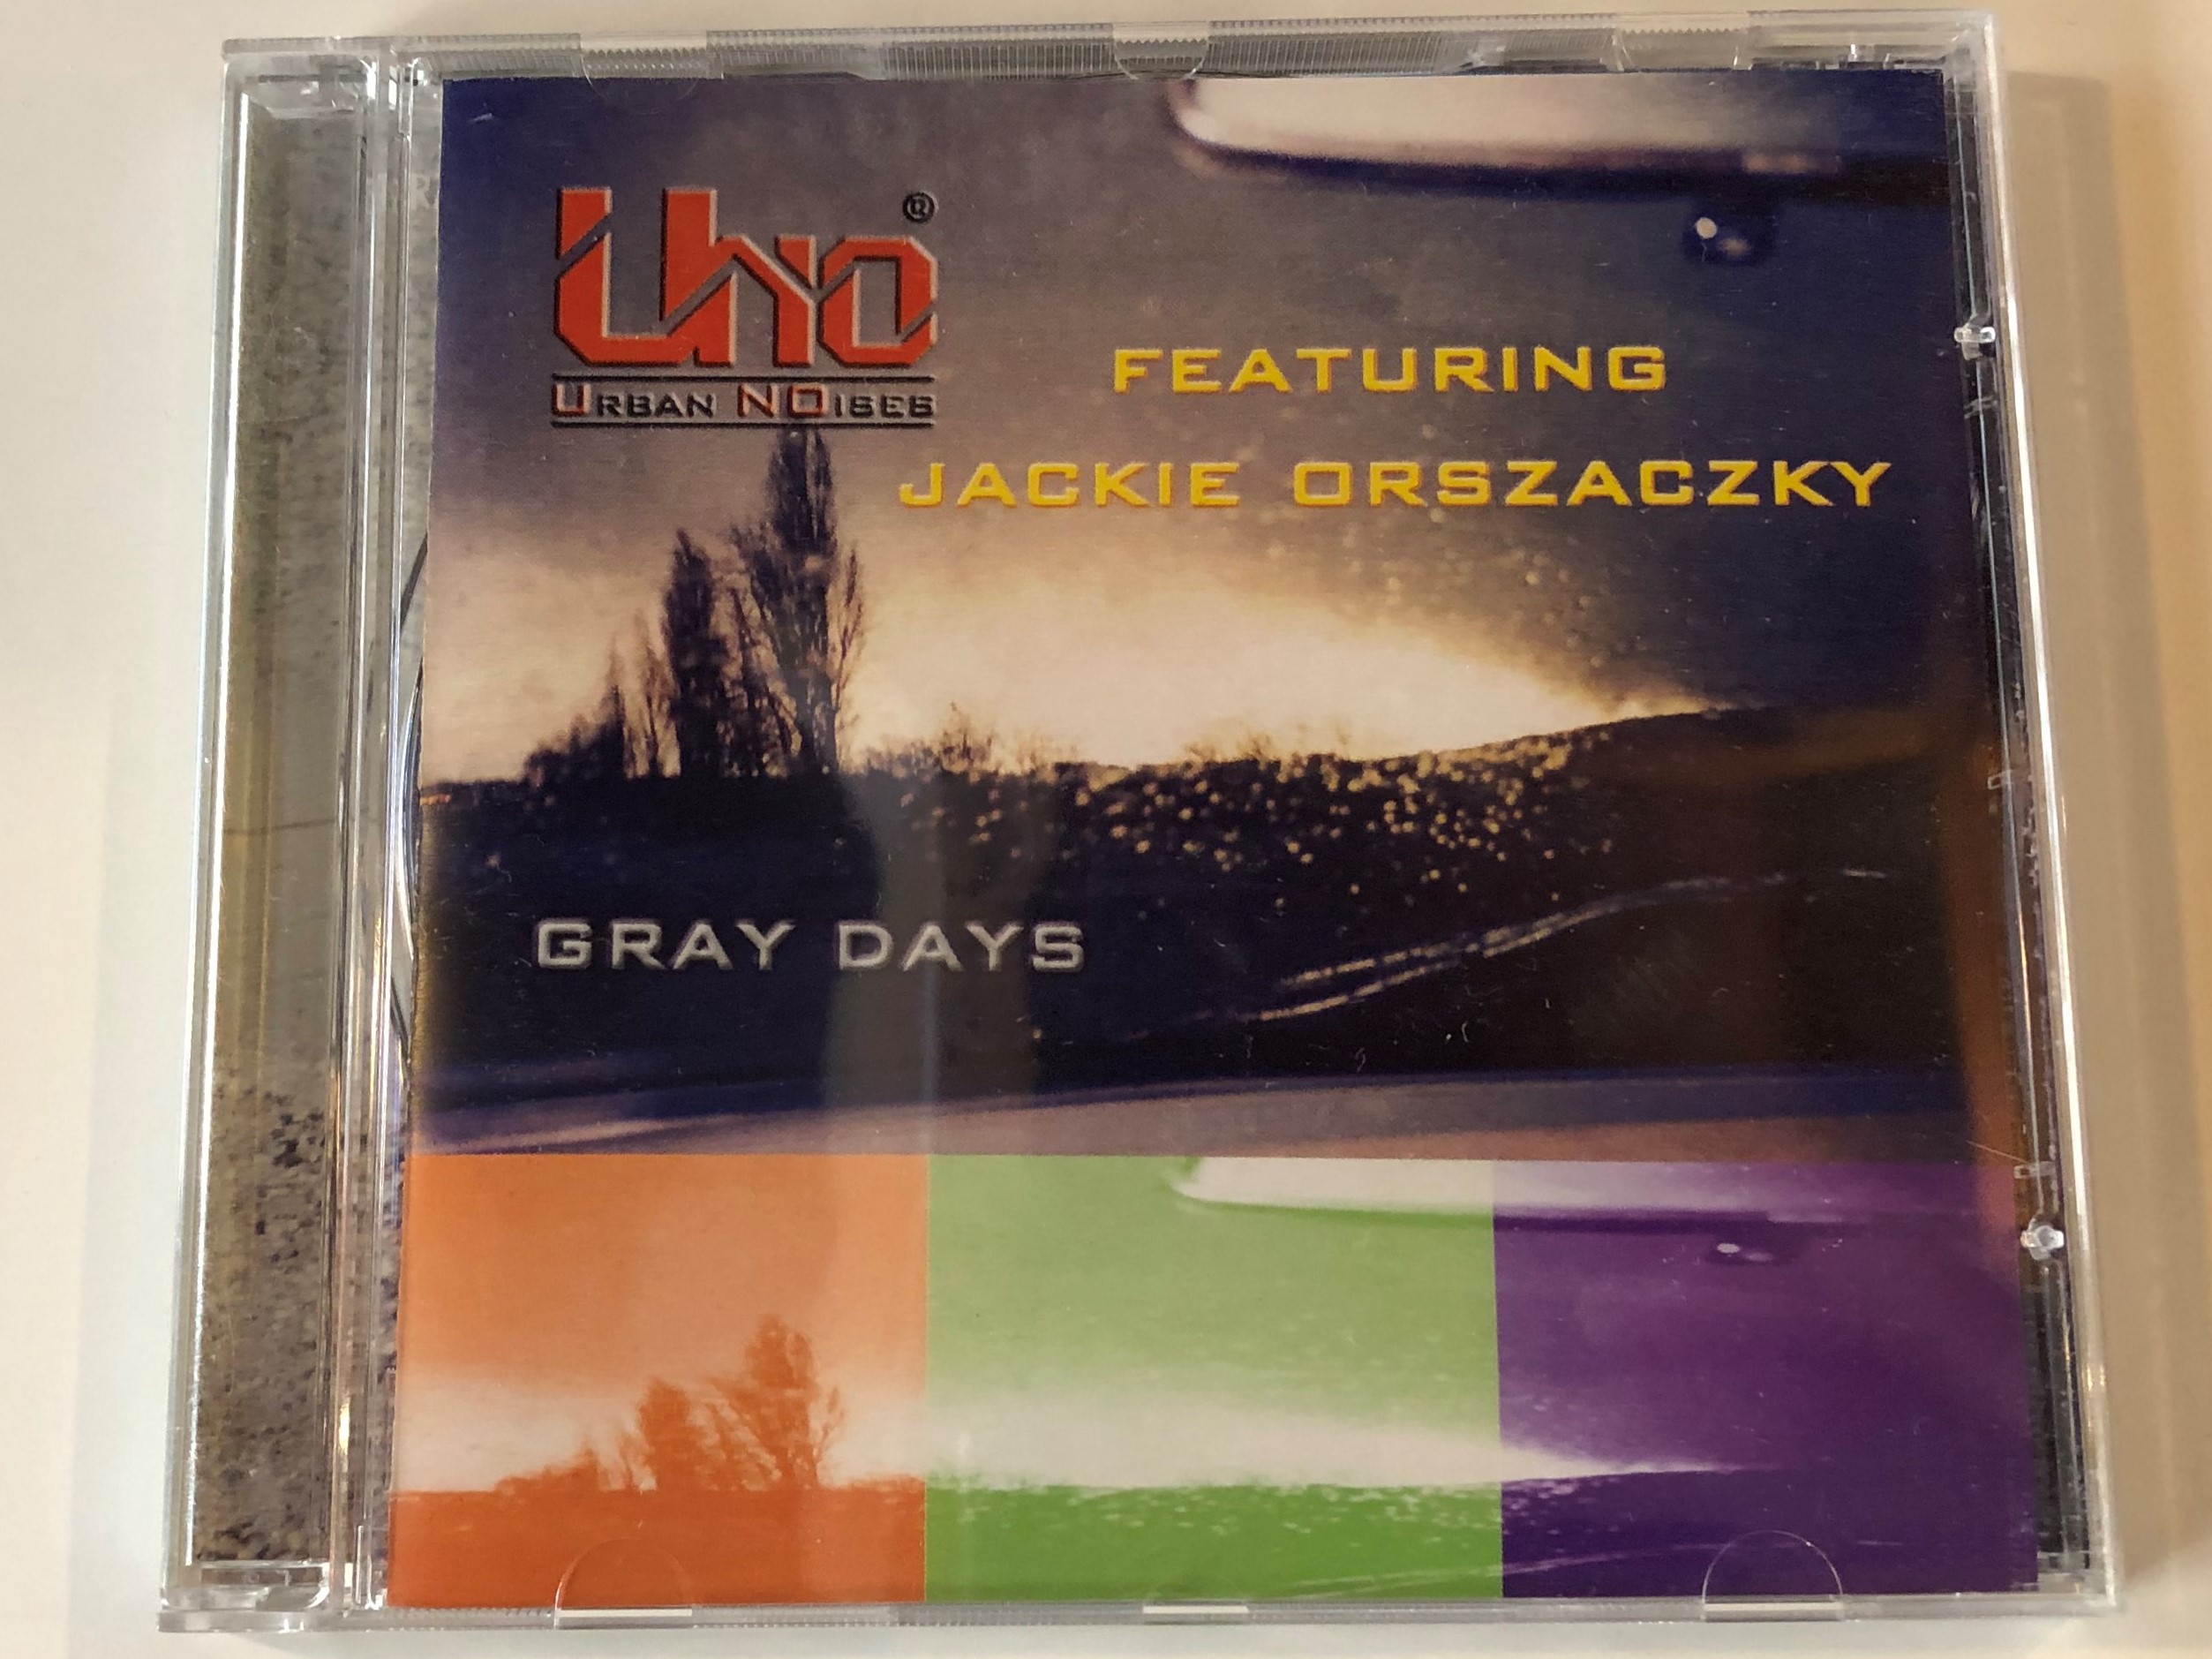 urban-noises-featuring-jackie-orszaczky-gray-days-uno-records-audio-cd-2004-5999888010209-1-.jpg